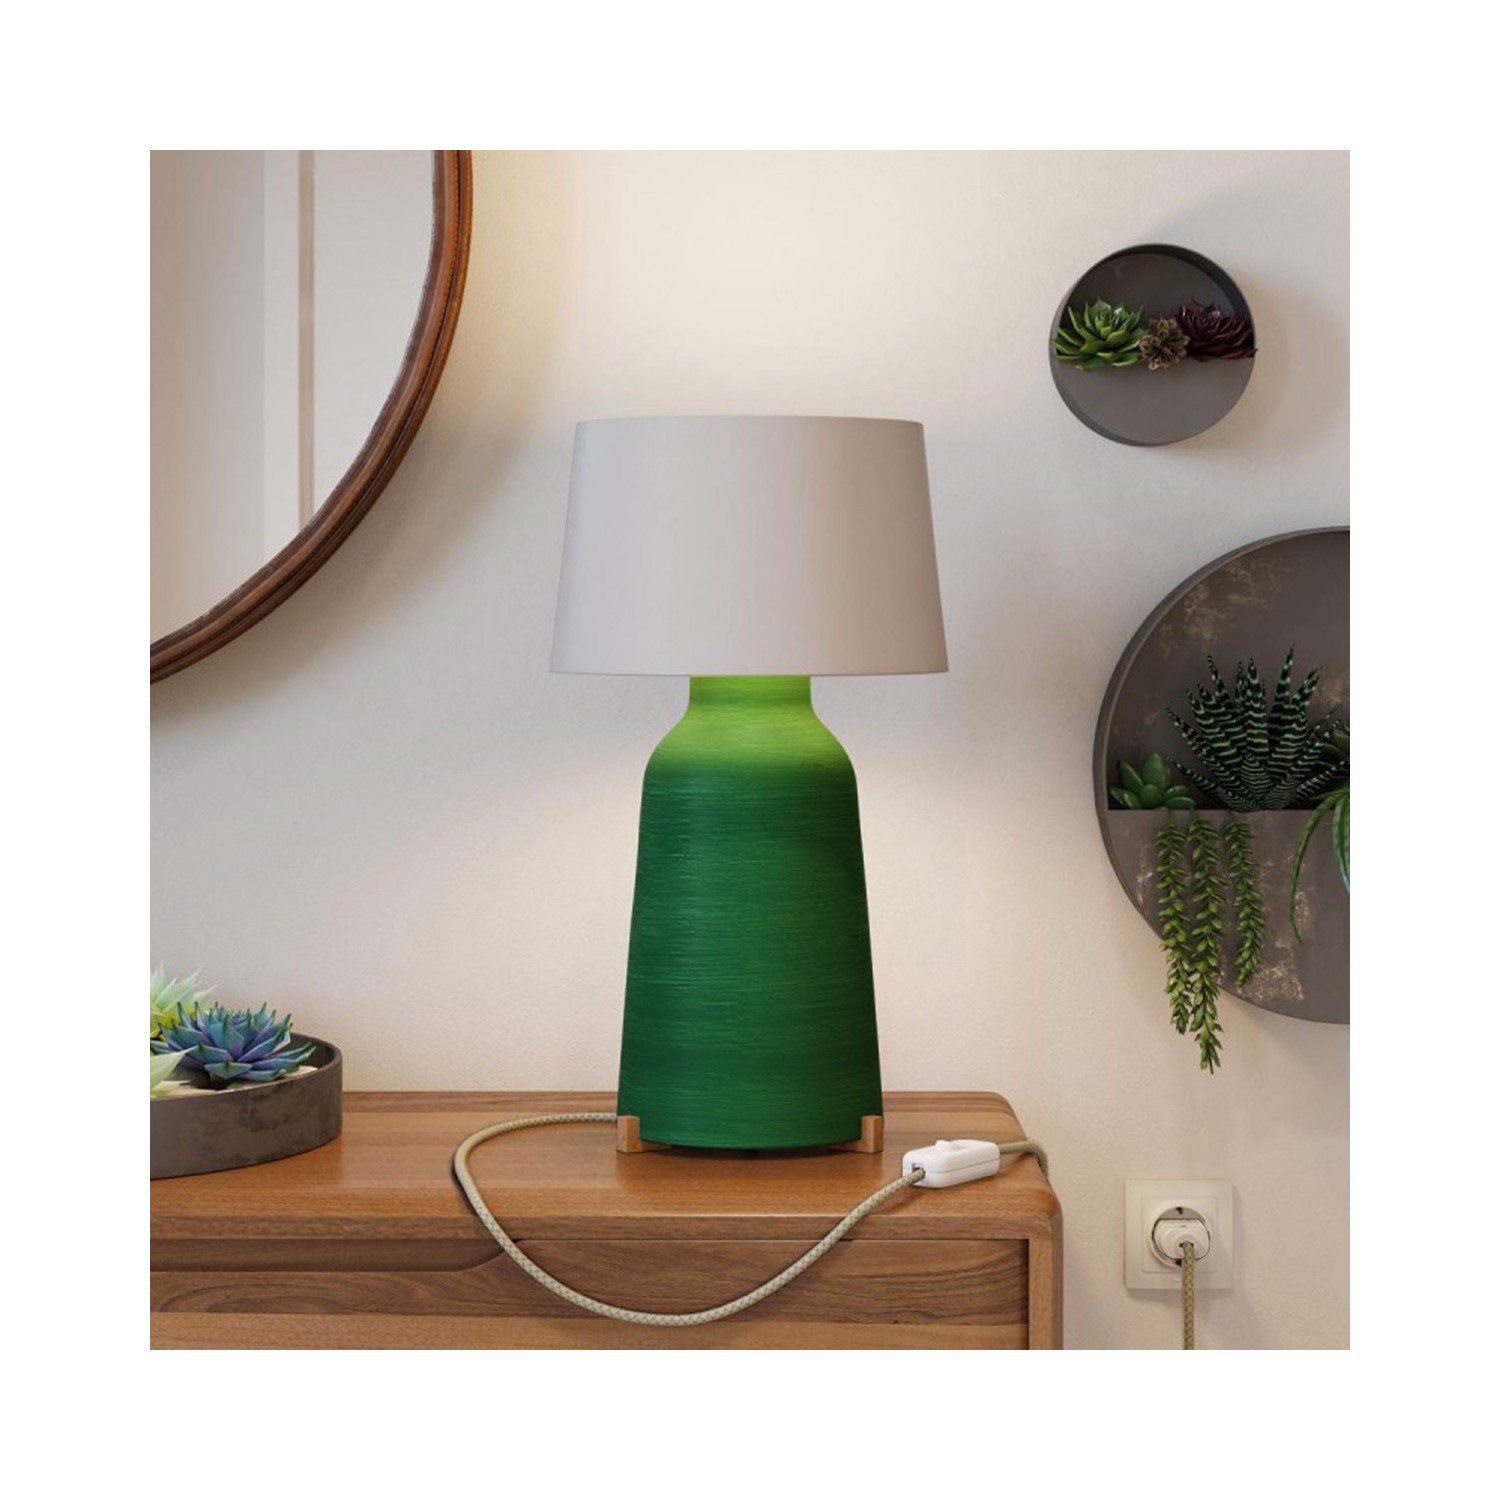 Lámpara de mesa de cerámica Bottiglia con pantalla o caperuza de lámpara Athena, completa con cable textil interruptor y enchufe